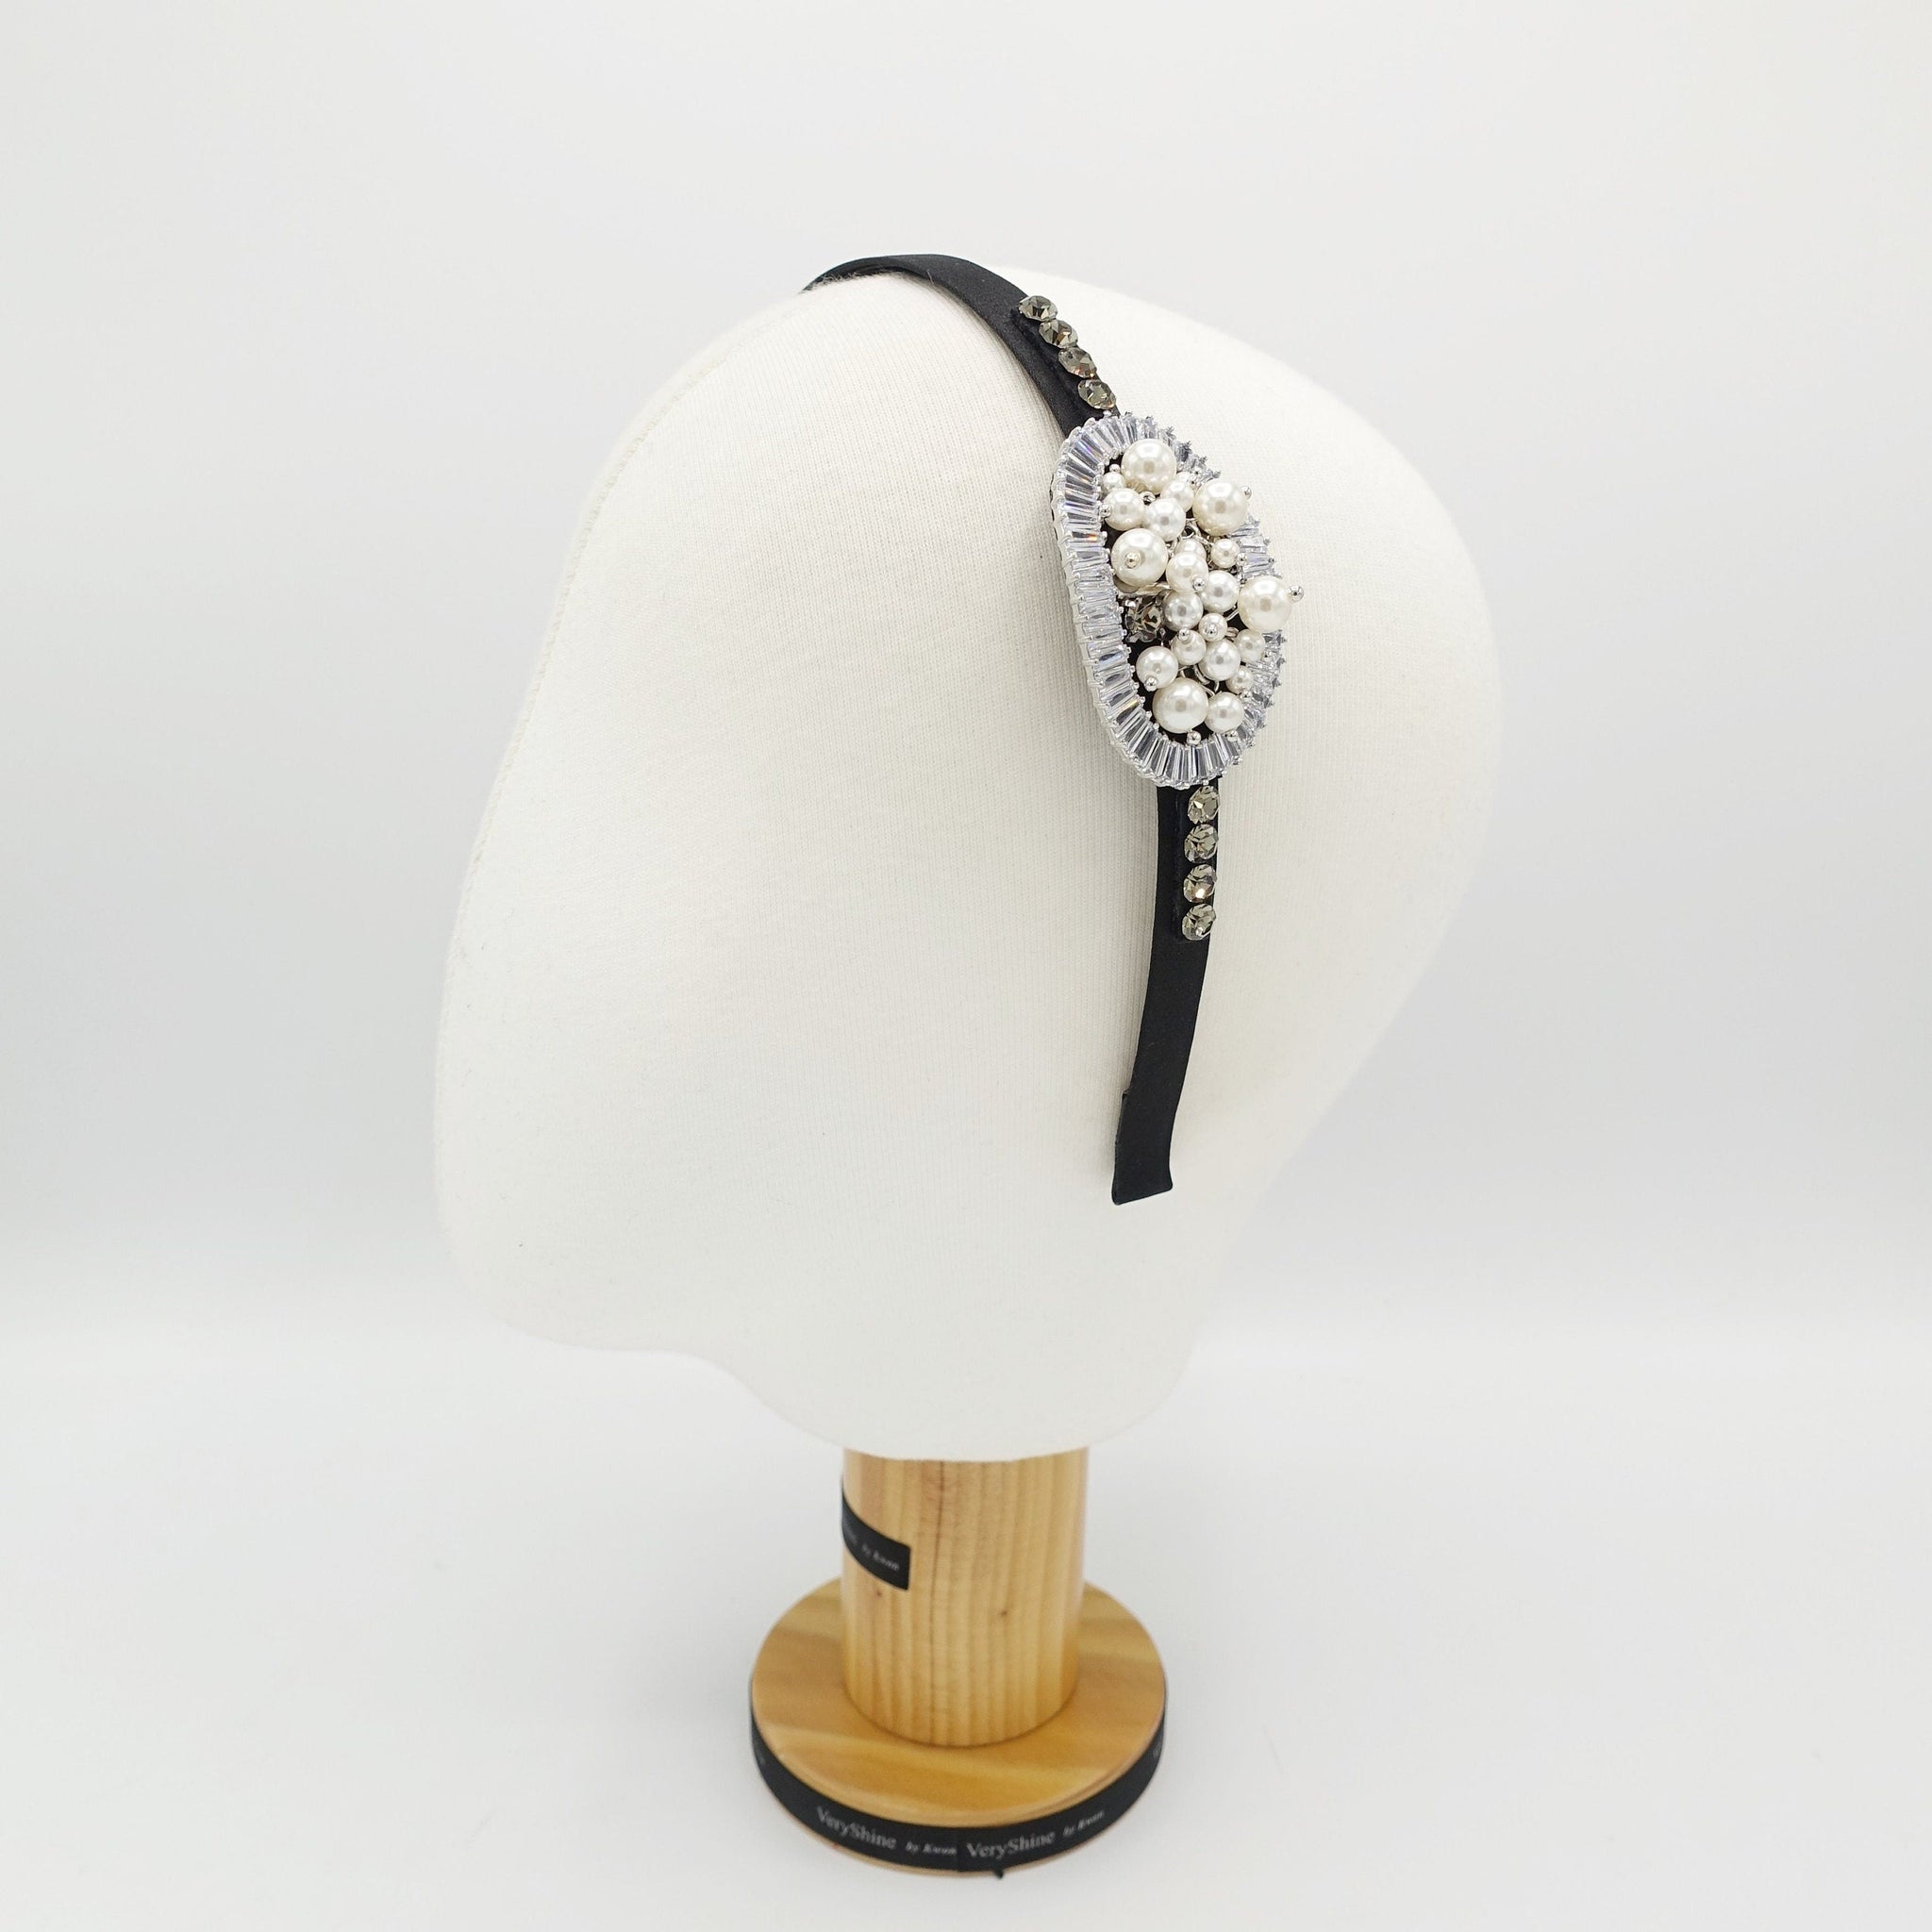 veryshine.com Headband bling headband pearl glass rhinestone embellished oval thin hairband women hair accessory